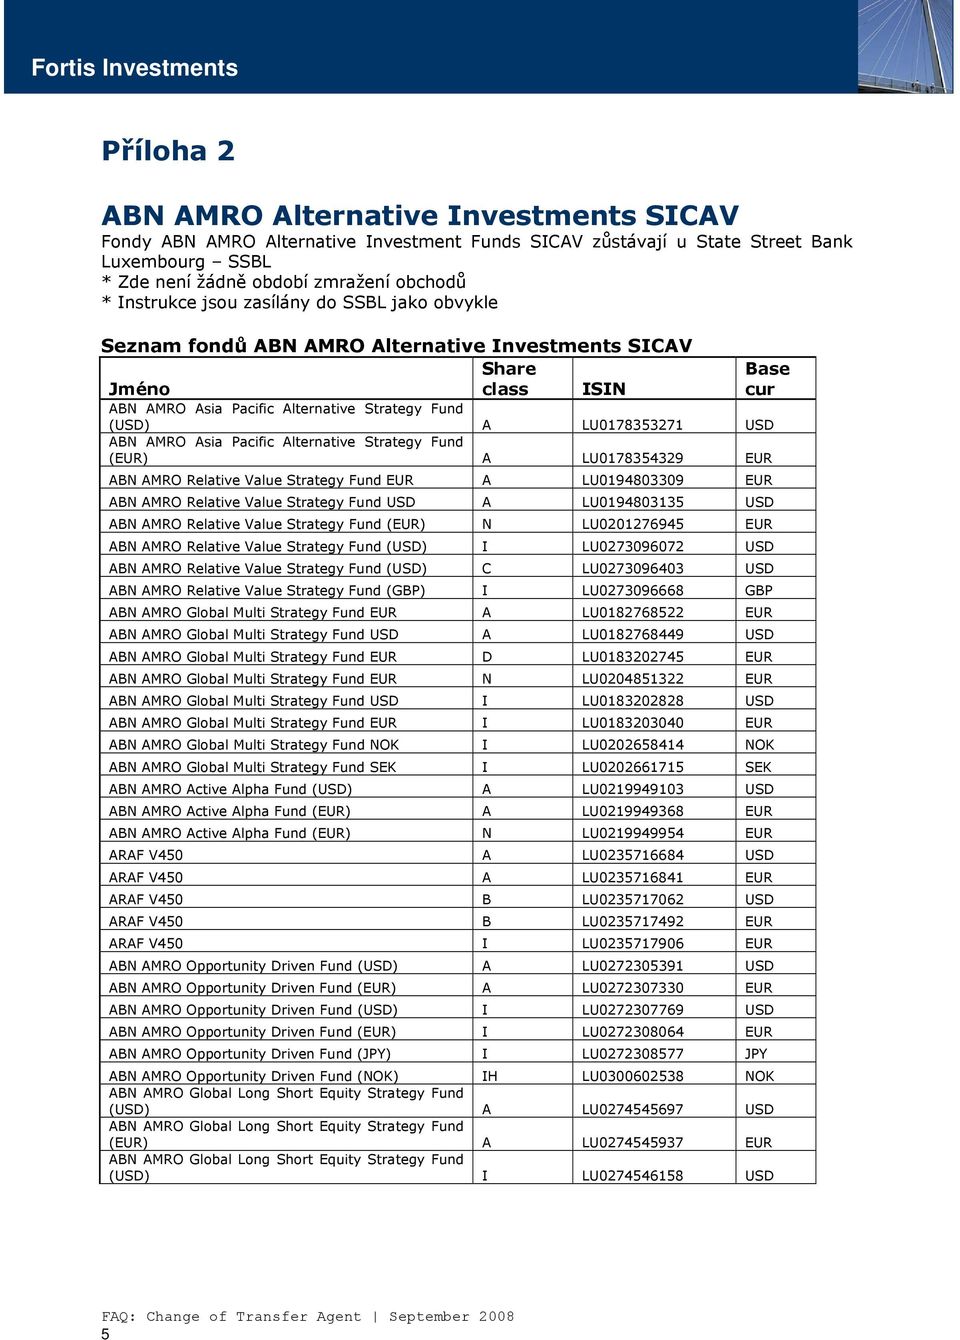 AMRO Asia Pacific Alternative Strategy Fund (EUR) A LU0178354329 EUR ABN AMRO Relative Value Strategy Fund EUR A LU0194803309 EUR ABN AMRO Relative Value Strategy Fund USD A LU0194803135 USD ABN AMRO